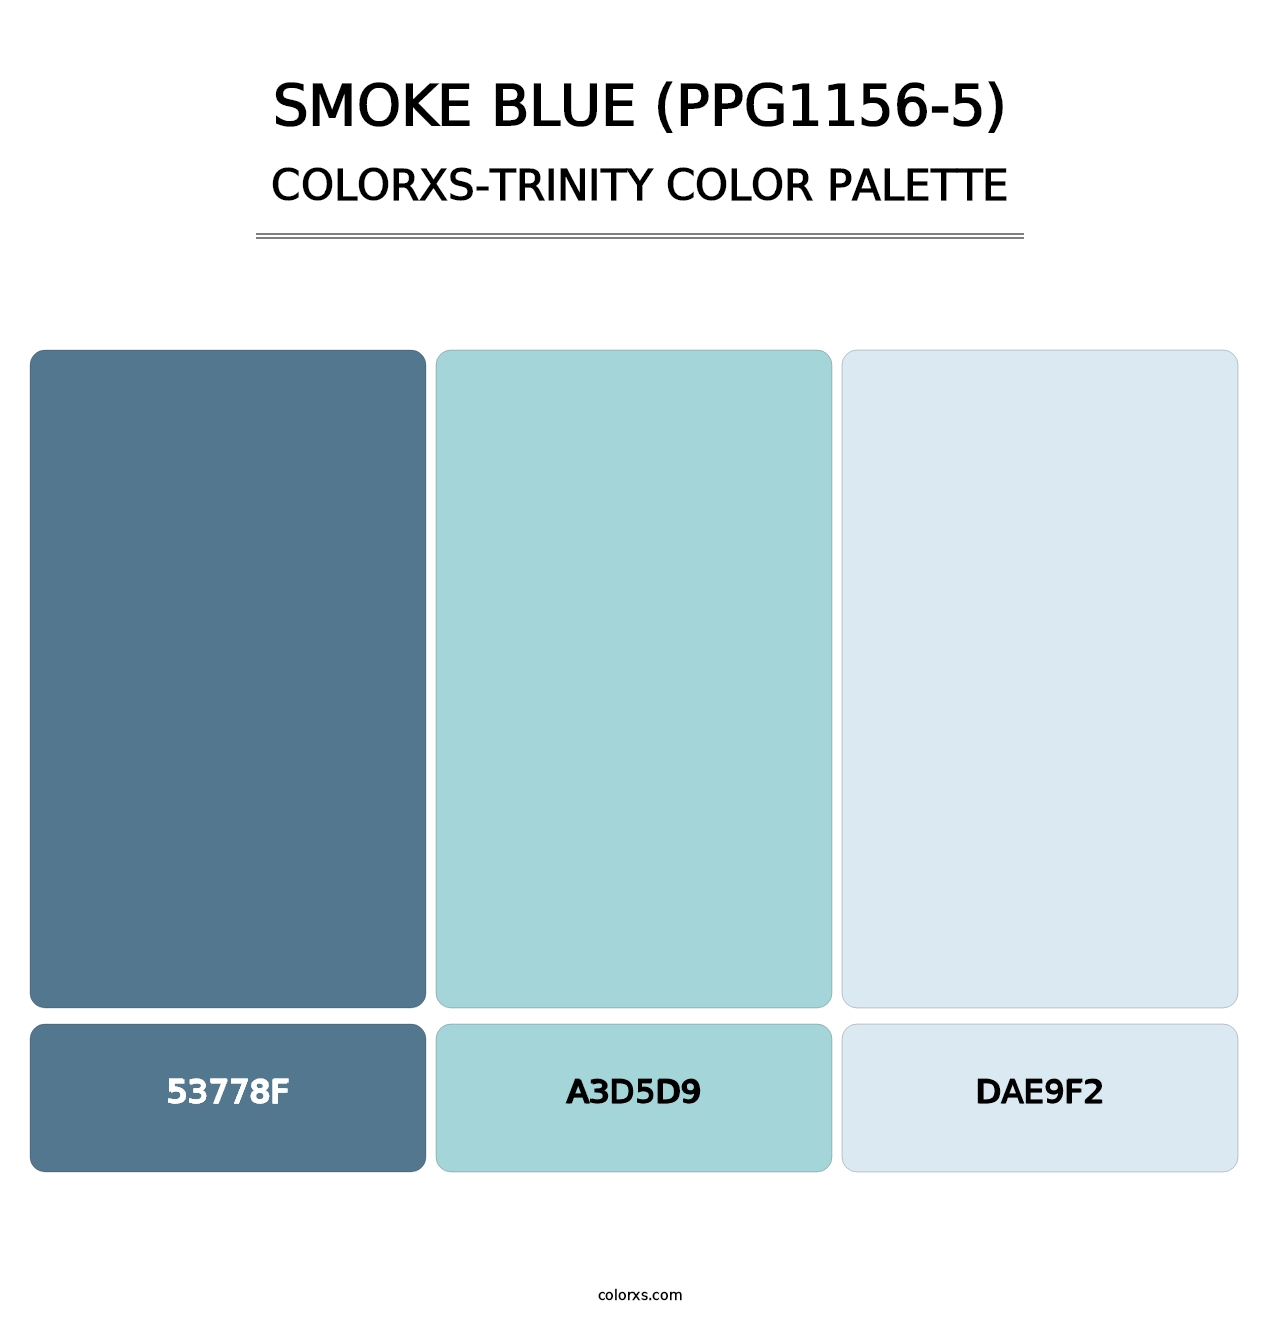 Smoke Blue (PPG1156-5) - Colorxs Trinity Palette